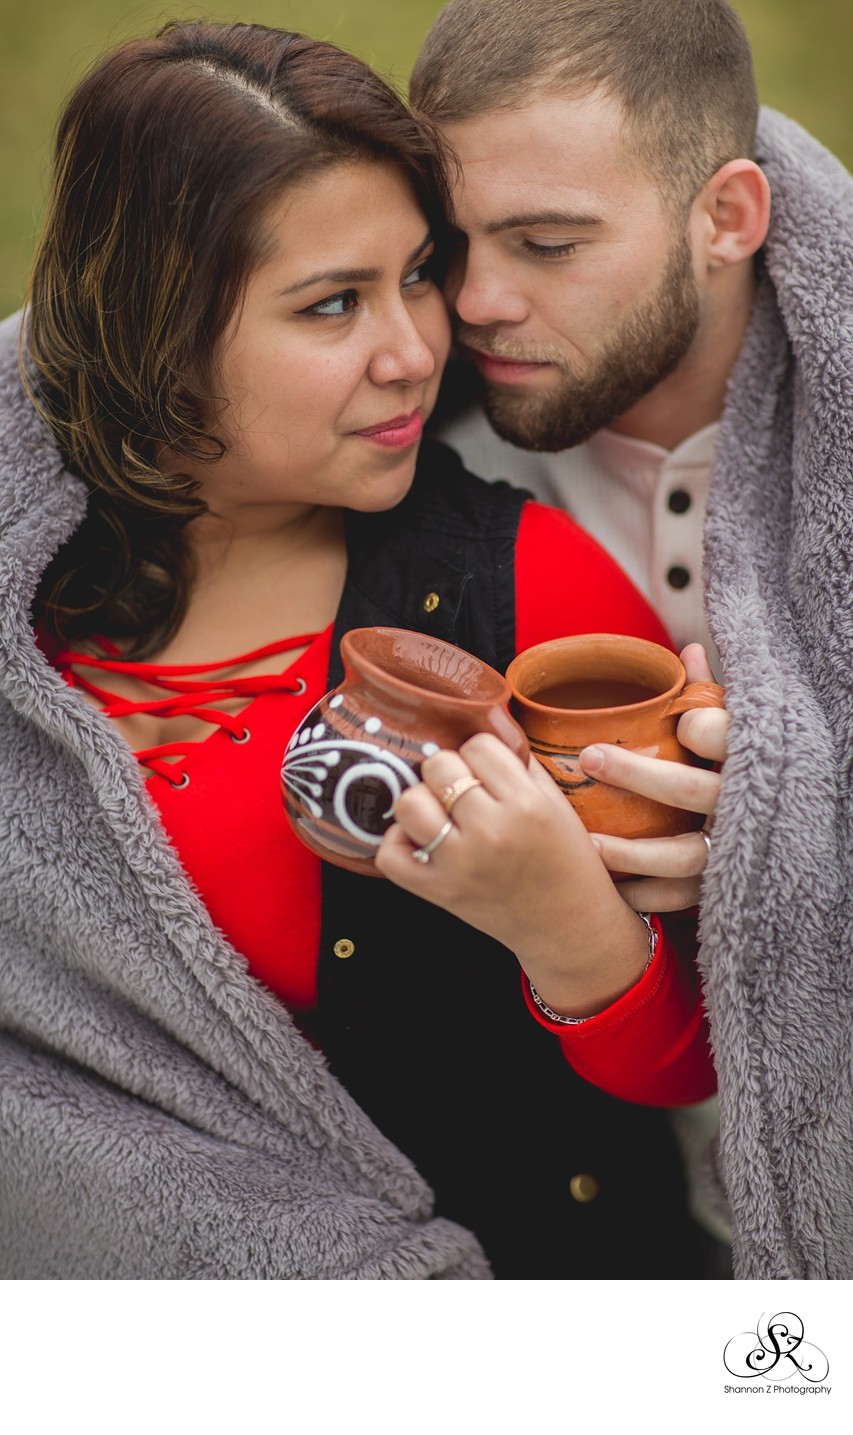 Couple Portraits: Engagement Photos with Mugs